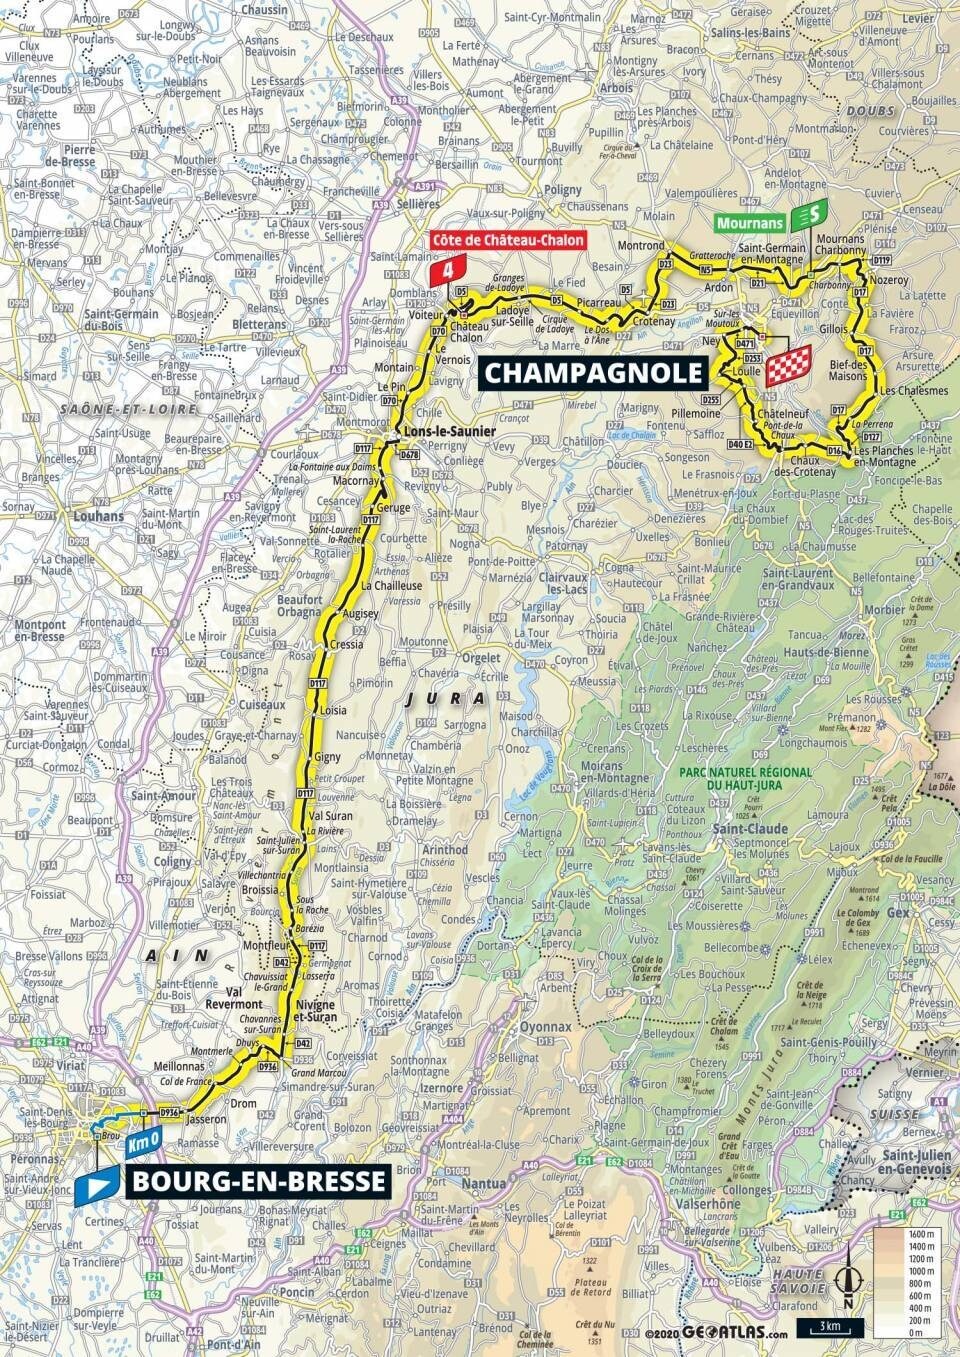 Tour de France 2020 - Planimetria Tappa 19